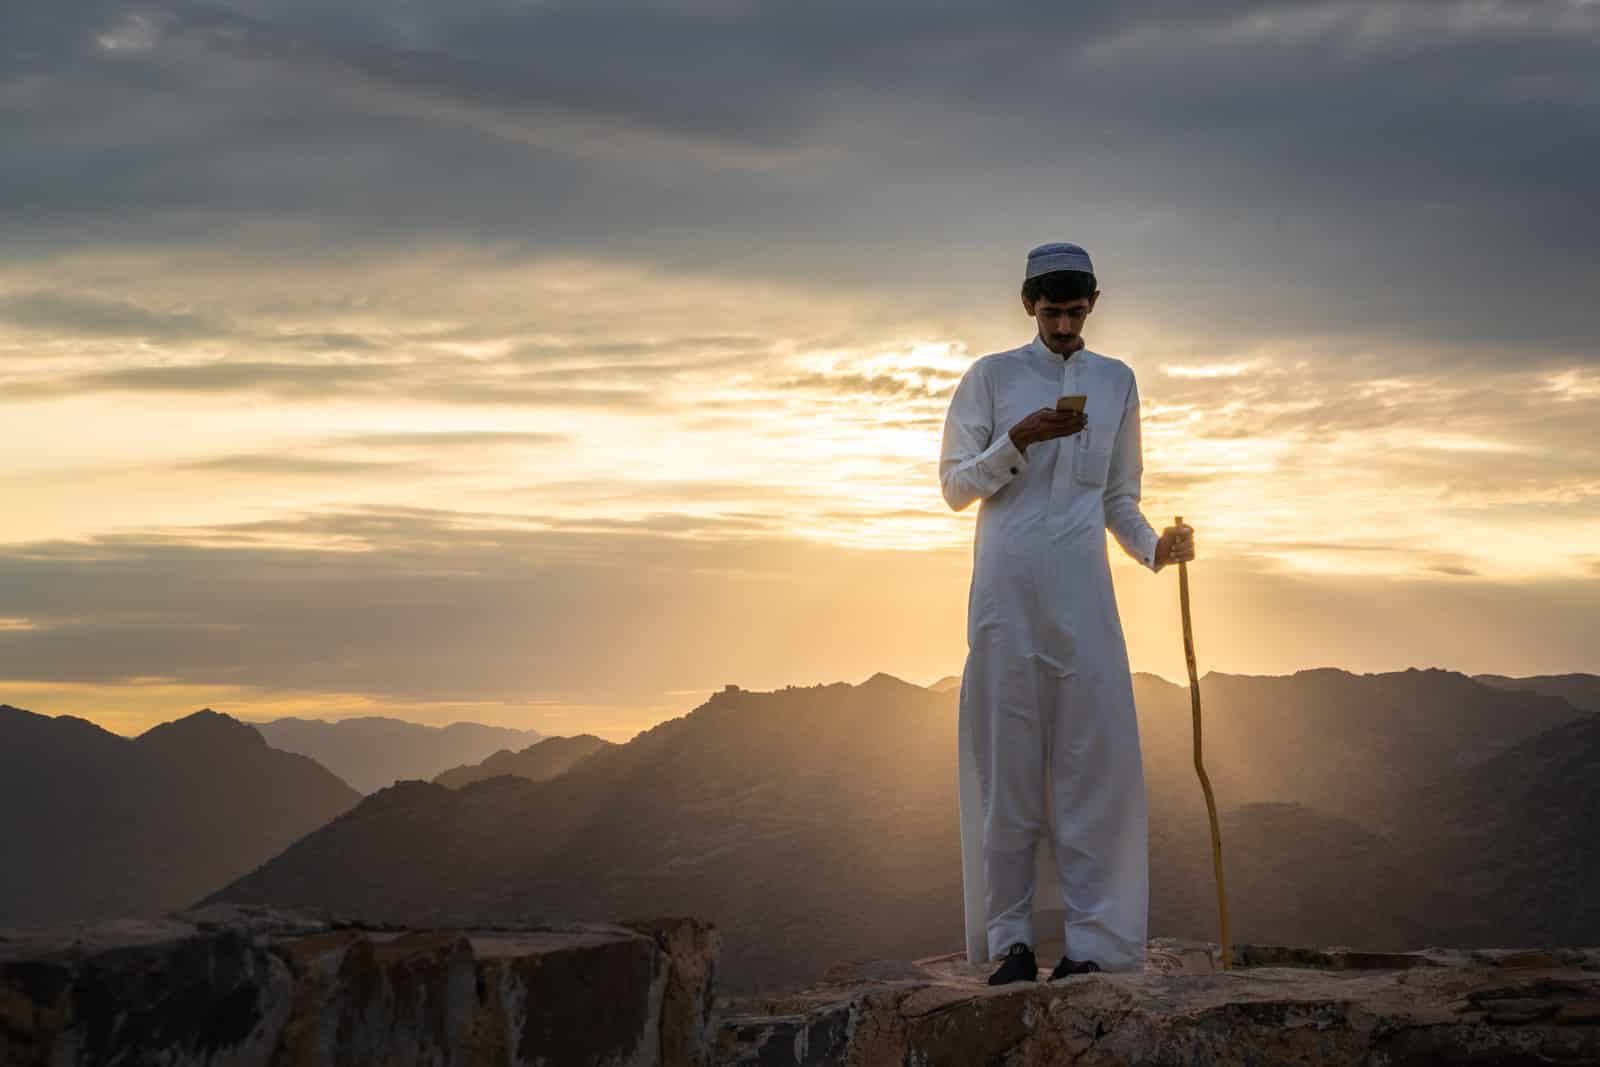 Boy on phone in Saudi Arabia